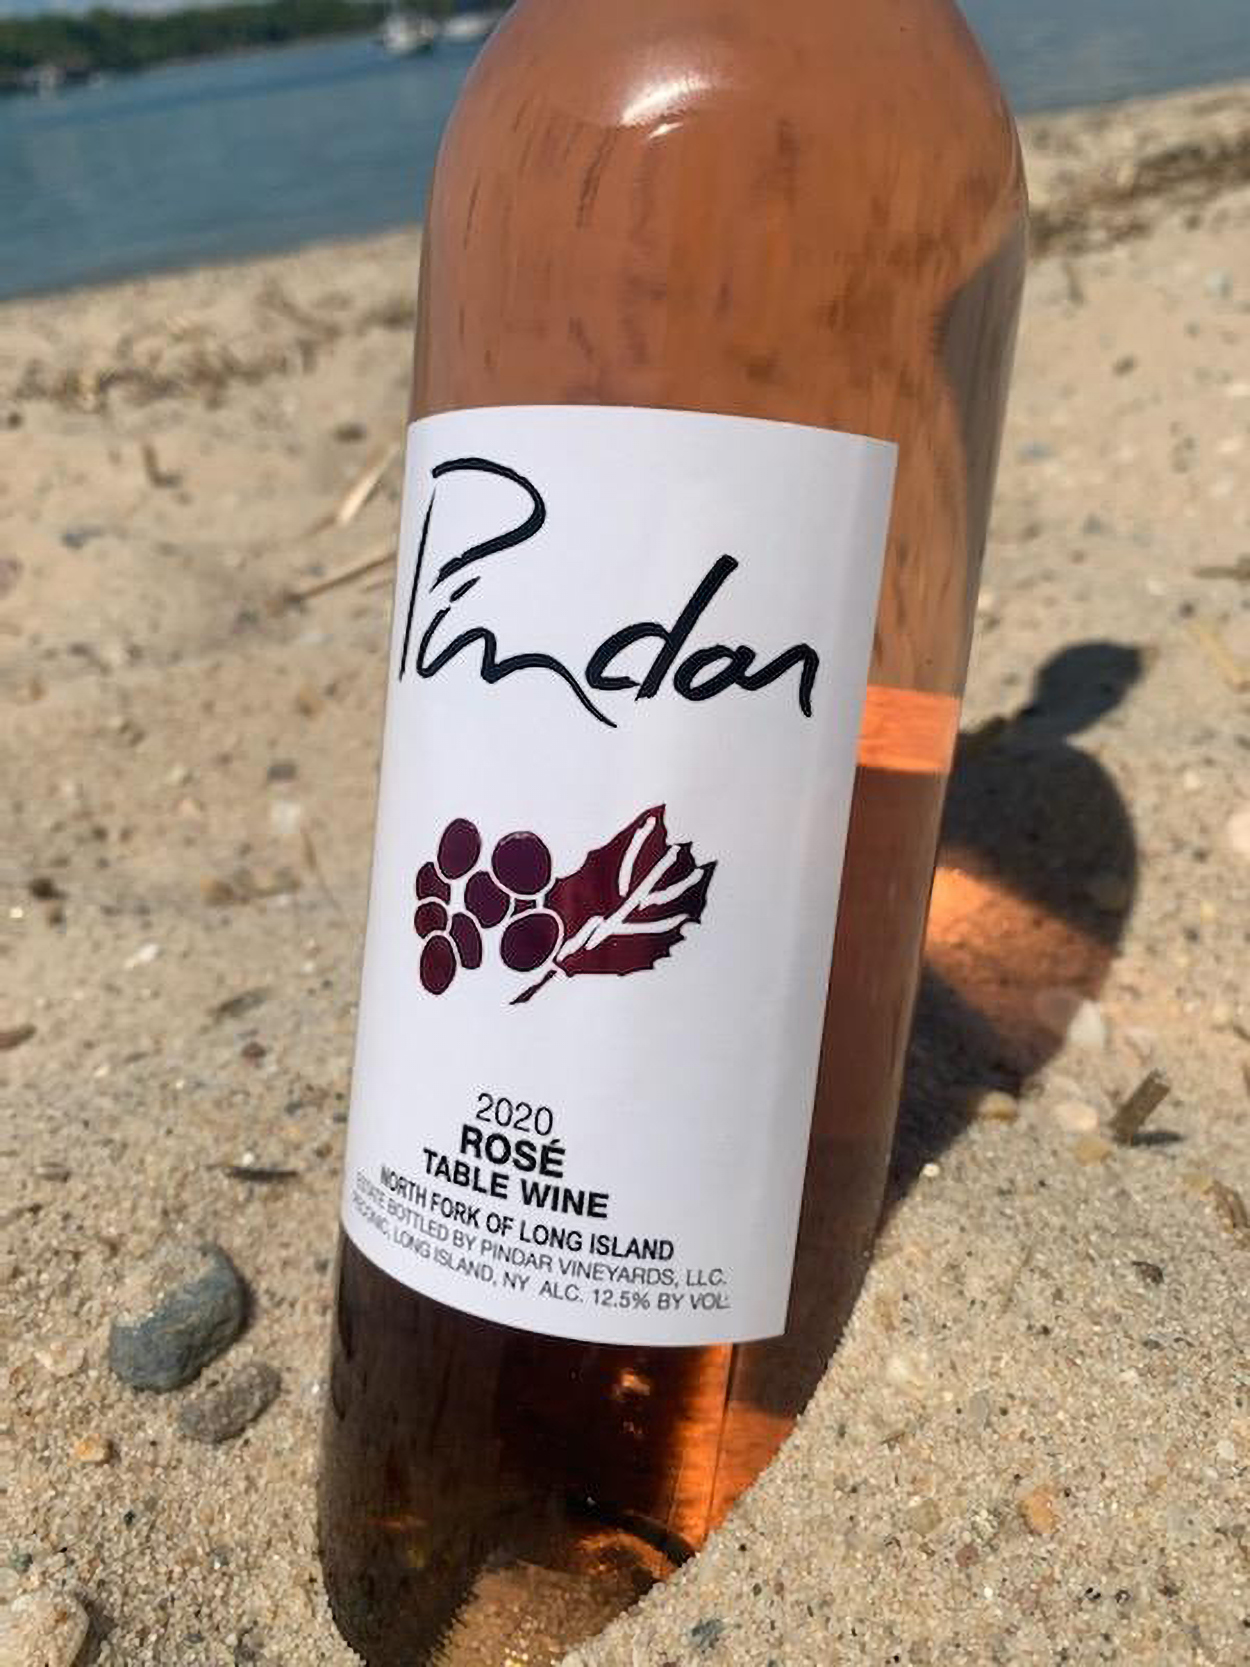 Pindar Vineyards' 2020 Rosé